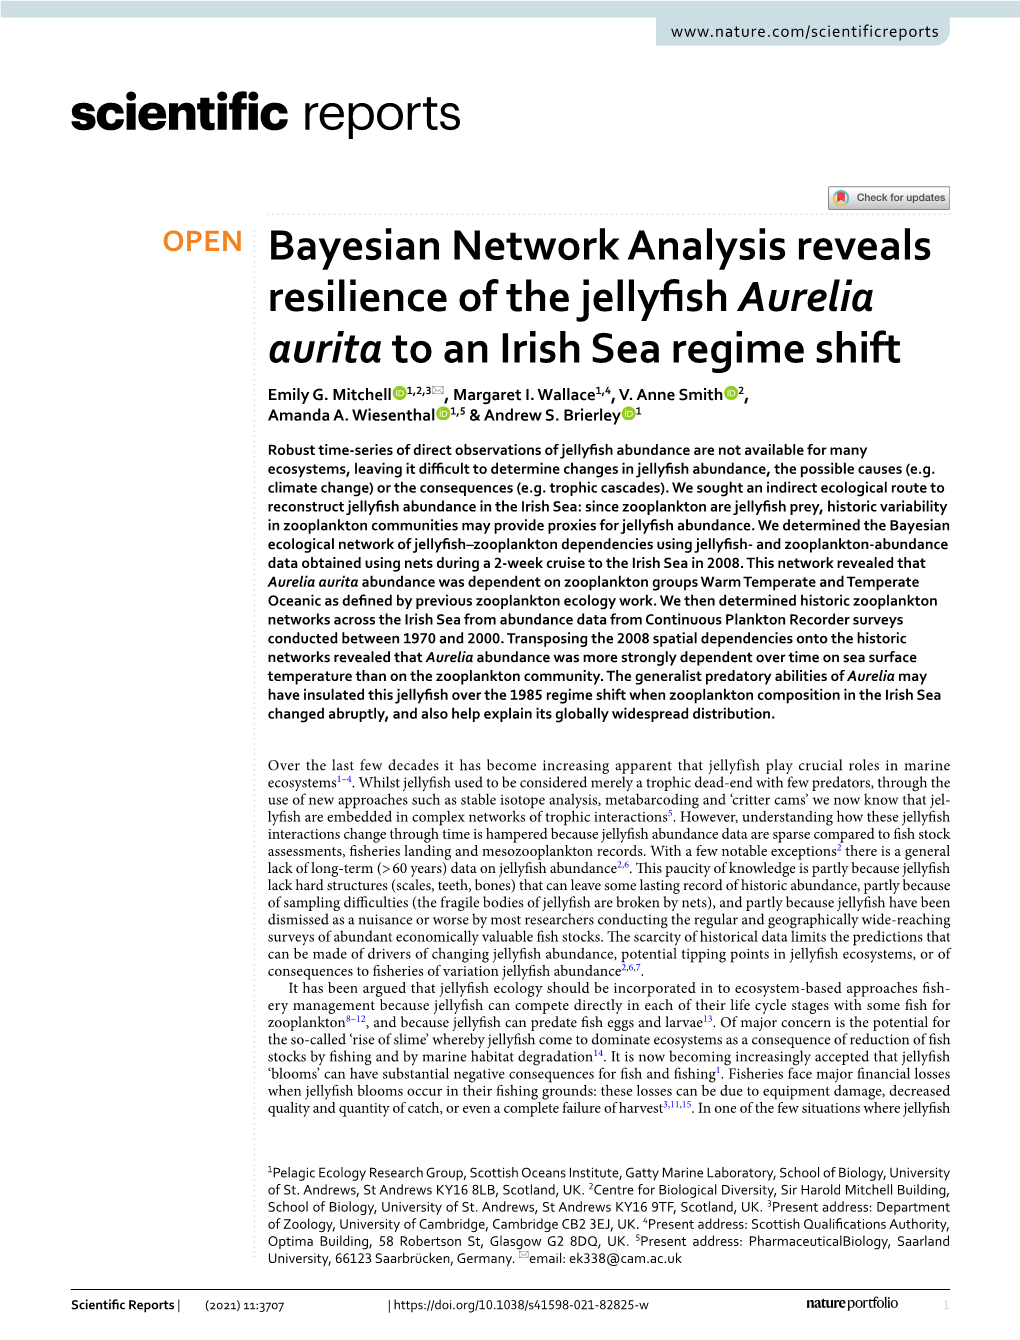 Bayesian Network Analysis Reveals Resilience of the Jellyfish Aurelia